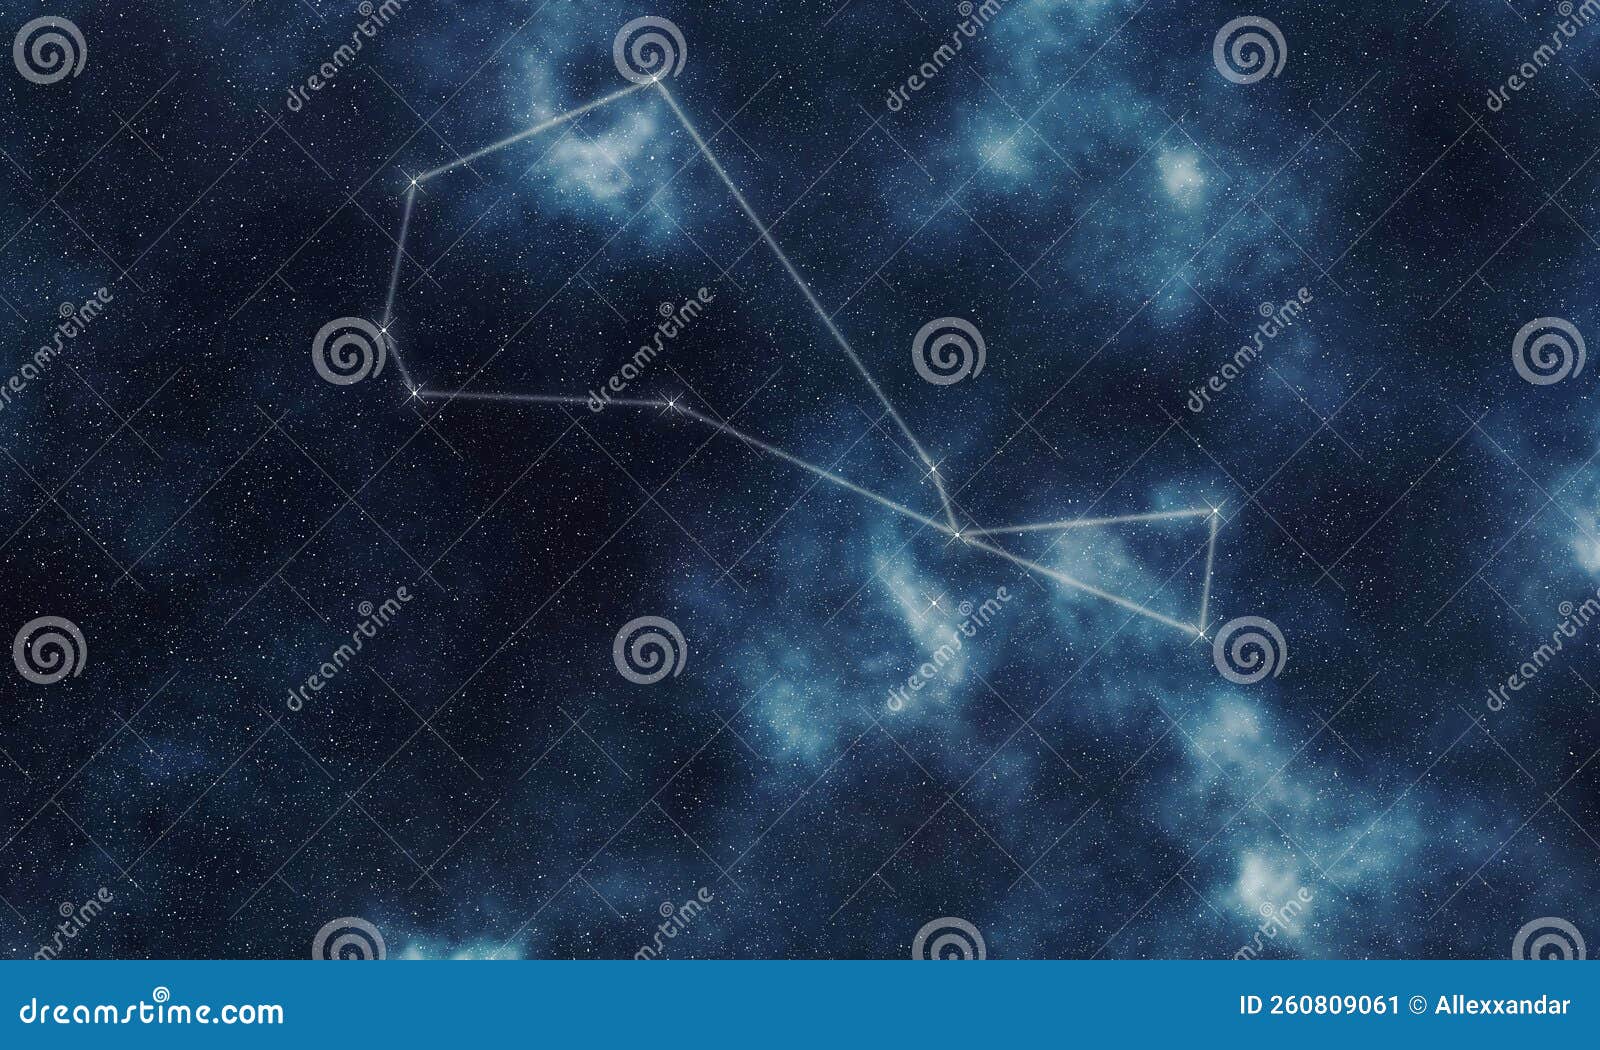 piscis austrinus star constellation, night sky southern fish